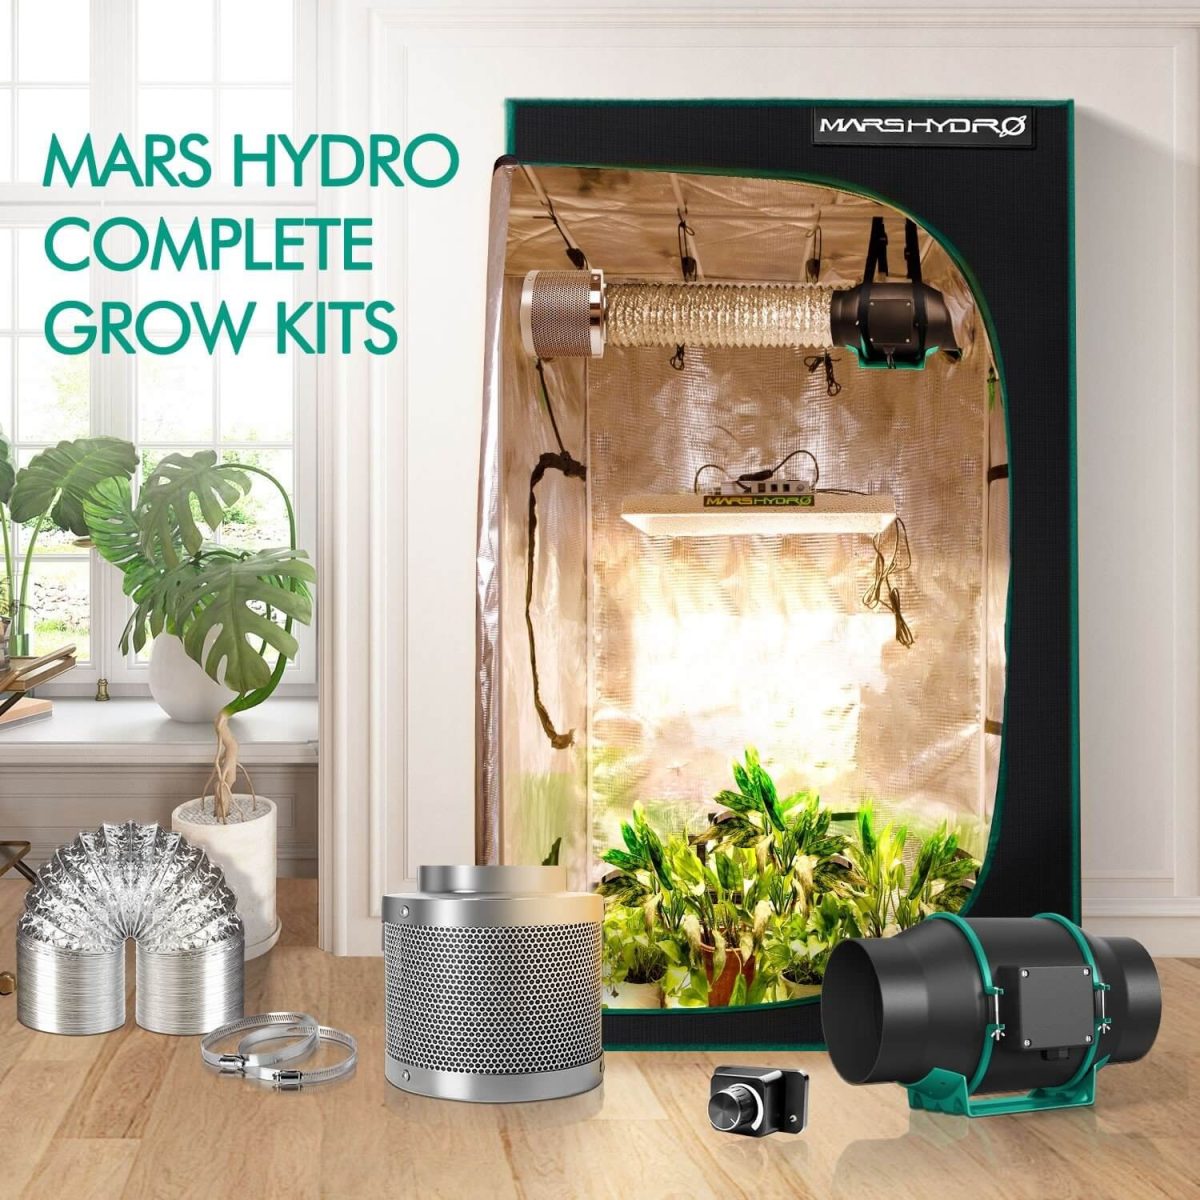 Mars Hydro 4'x4' complete grow tent kits, the best indoor grow tent kits